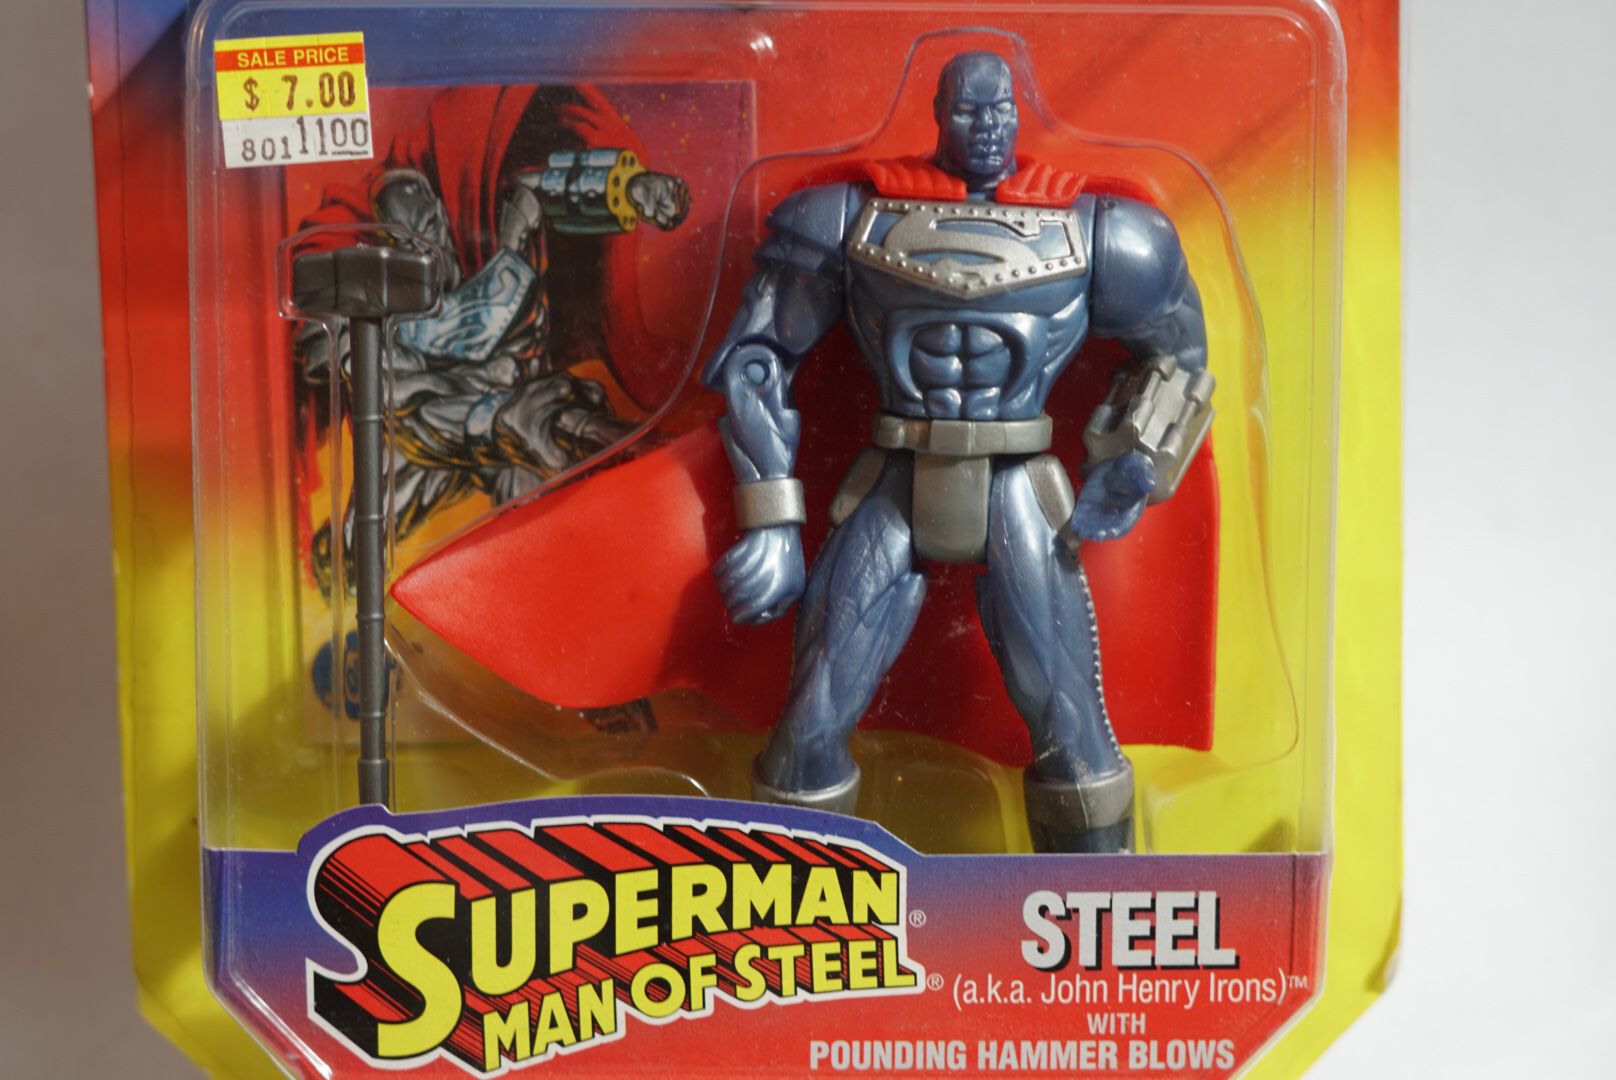 Superman Man is Steel